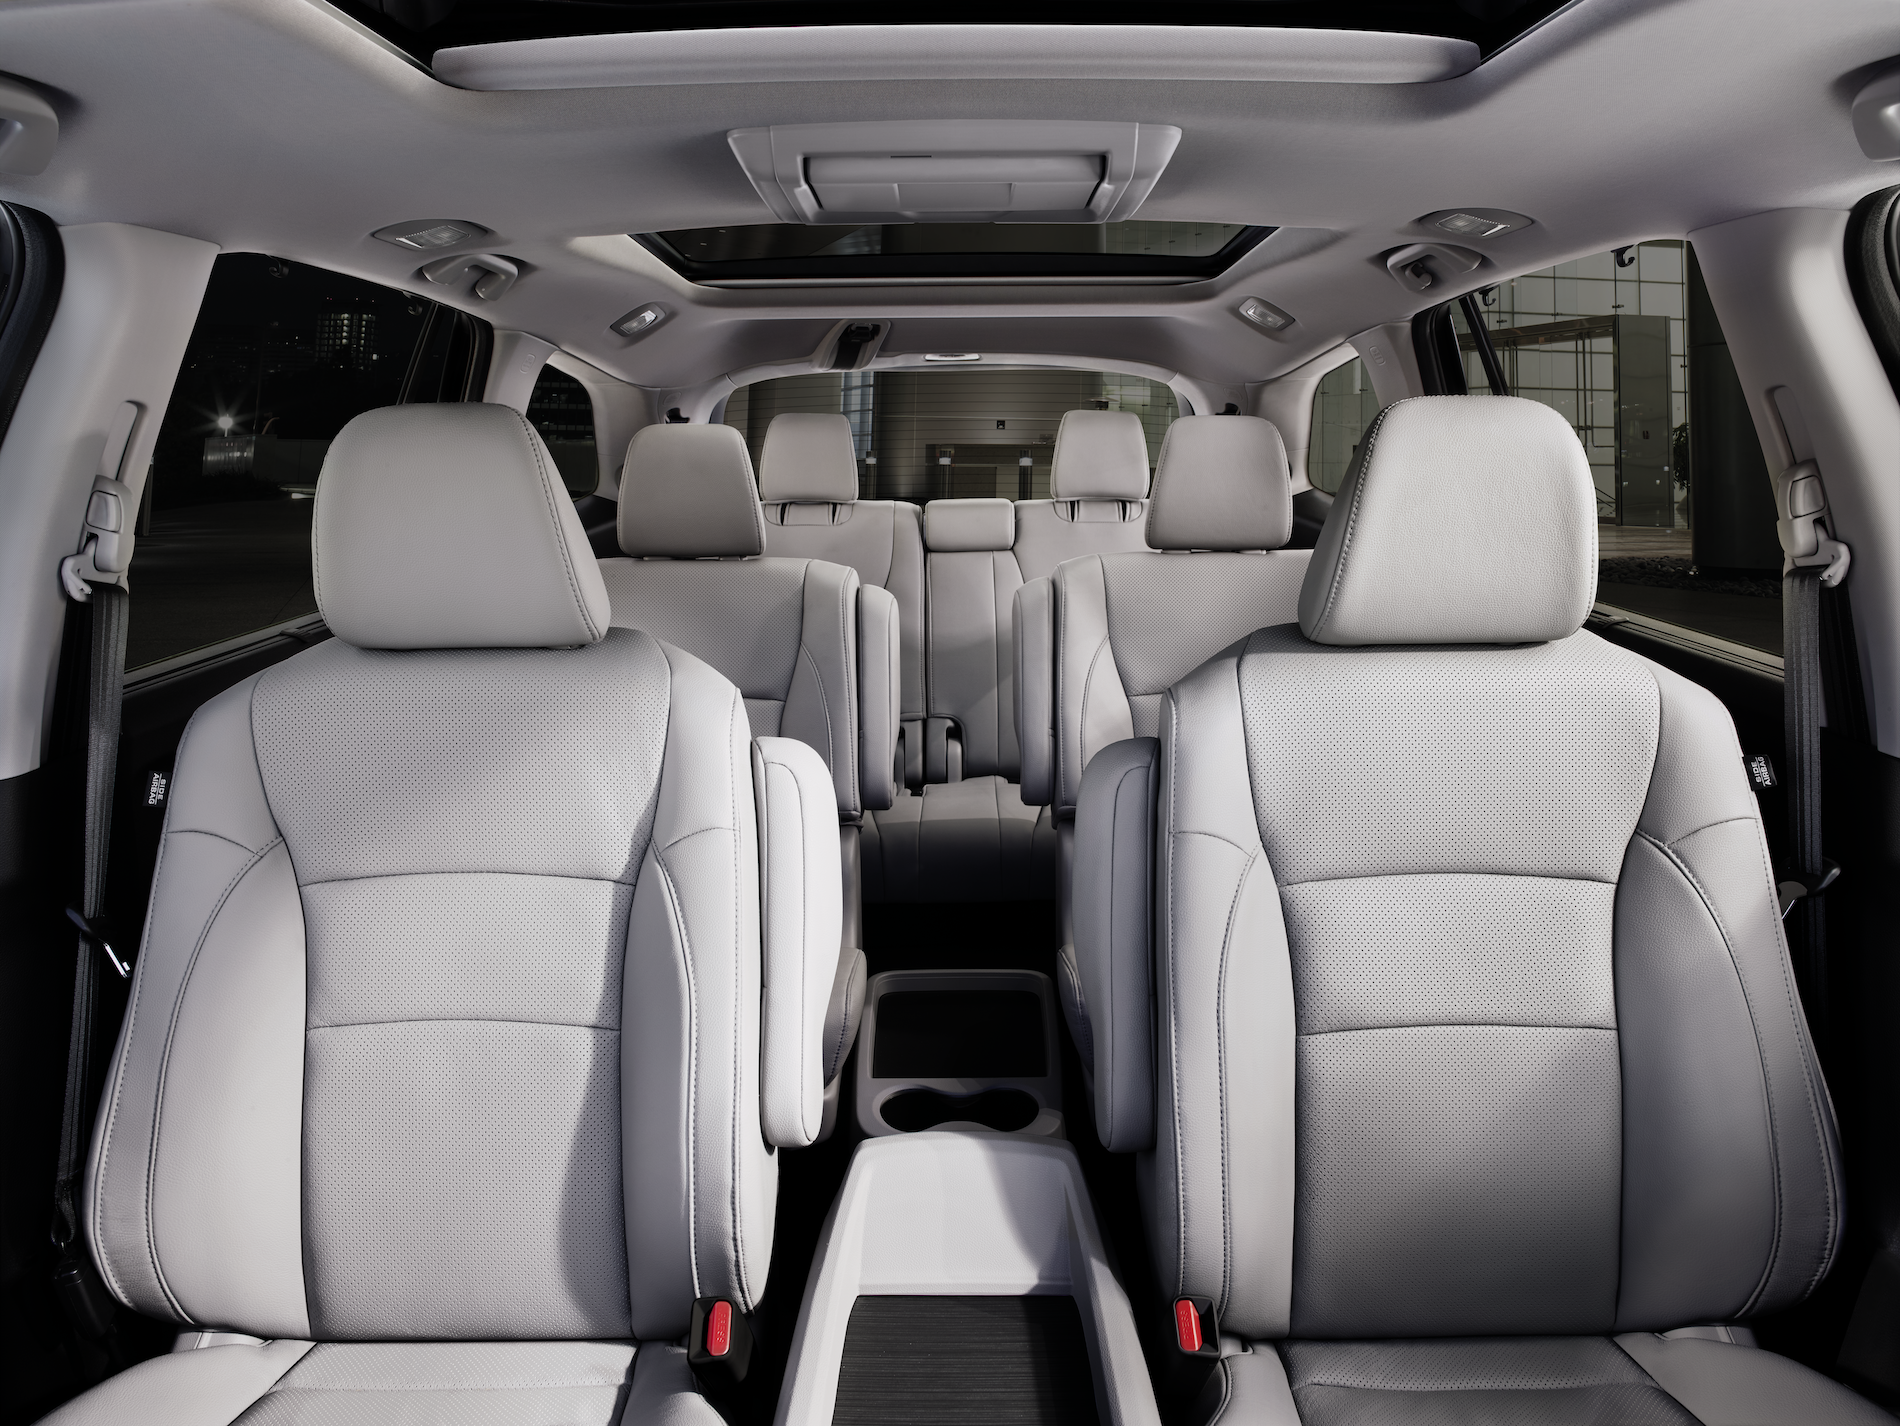 2021 Honda Pilot Interior Seating